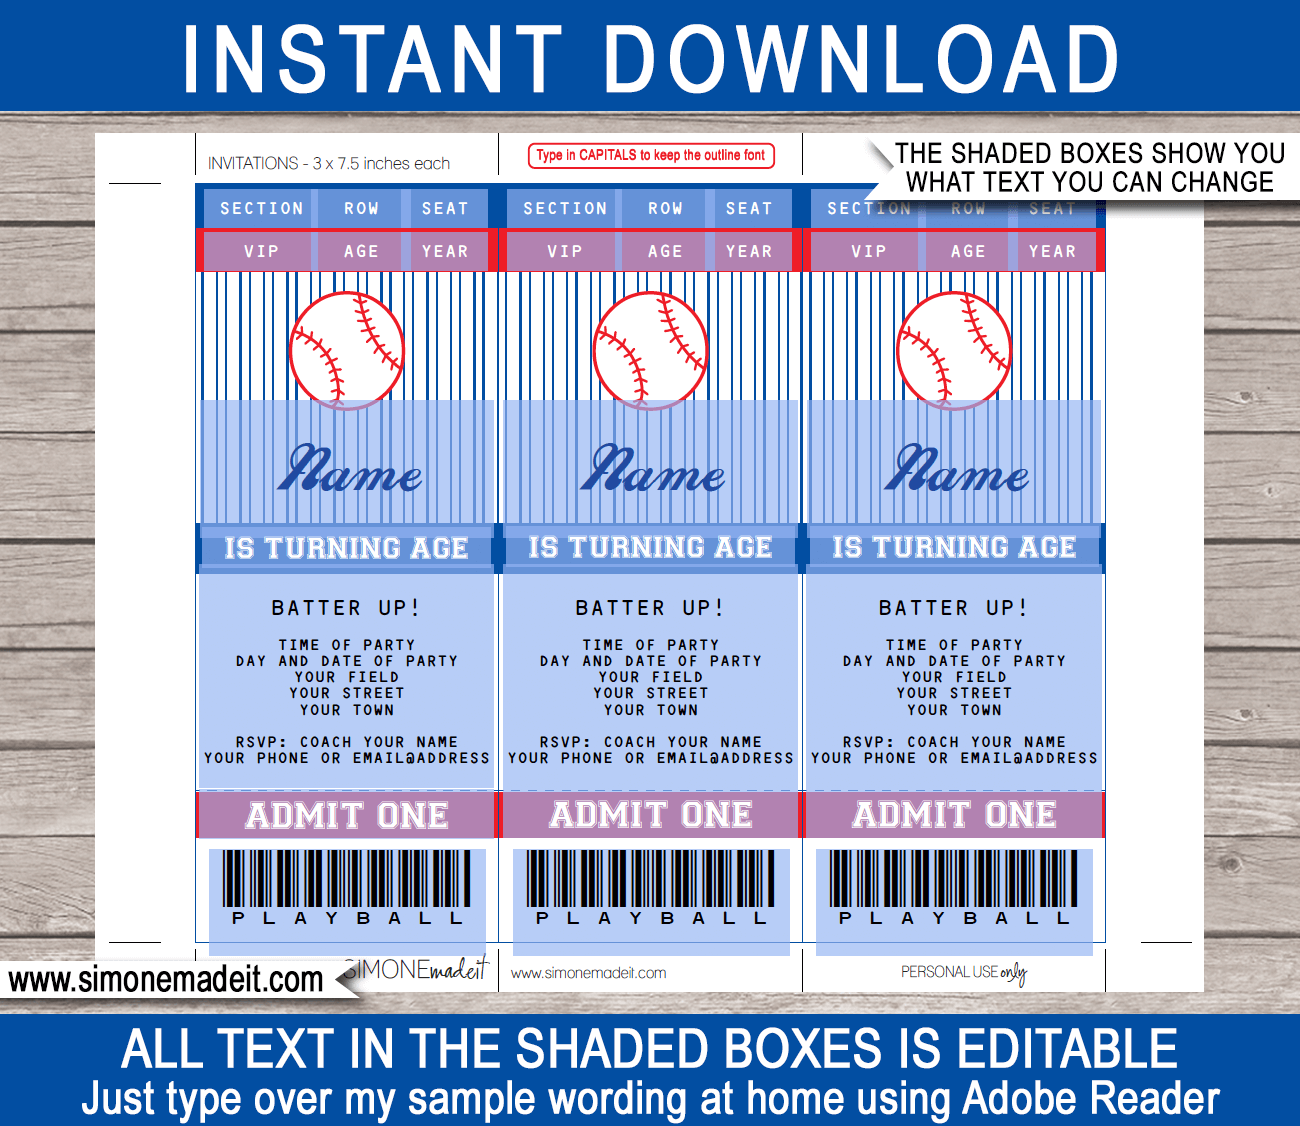 free printable baseball ticket template